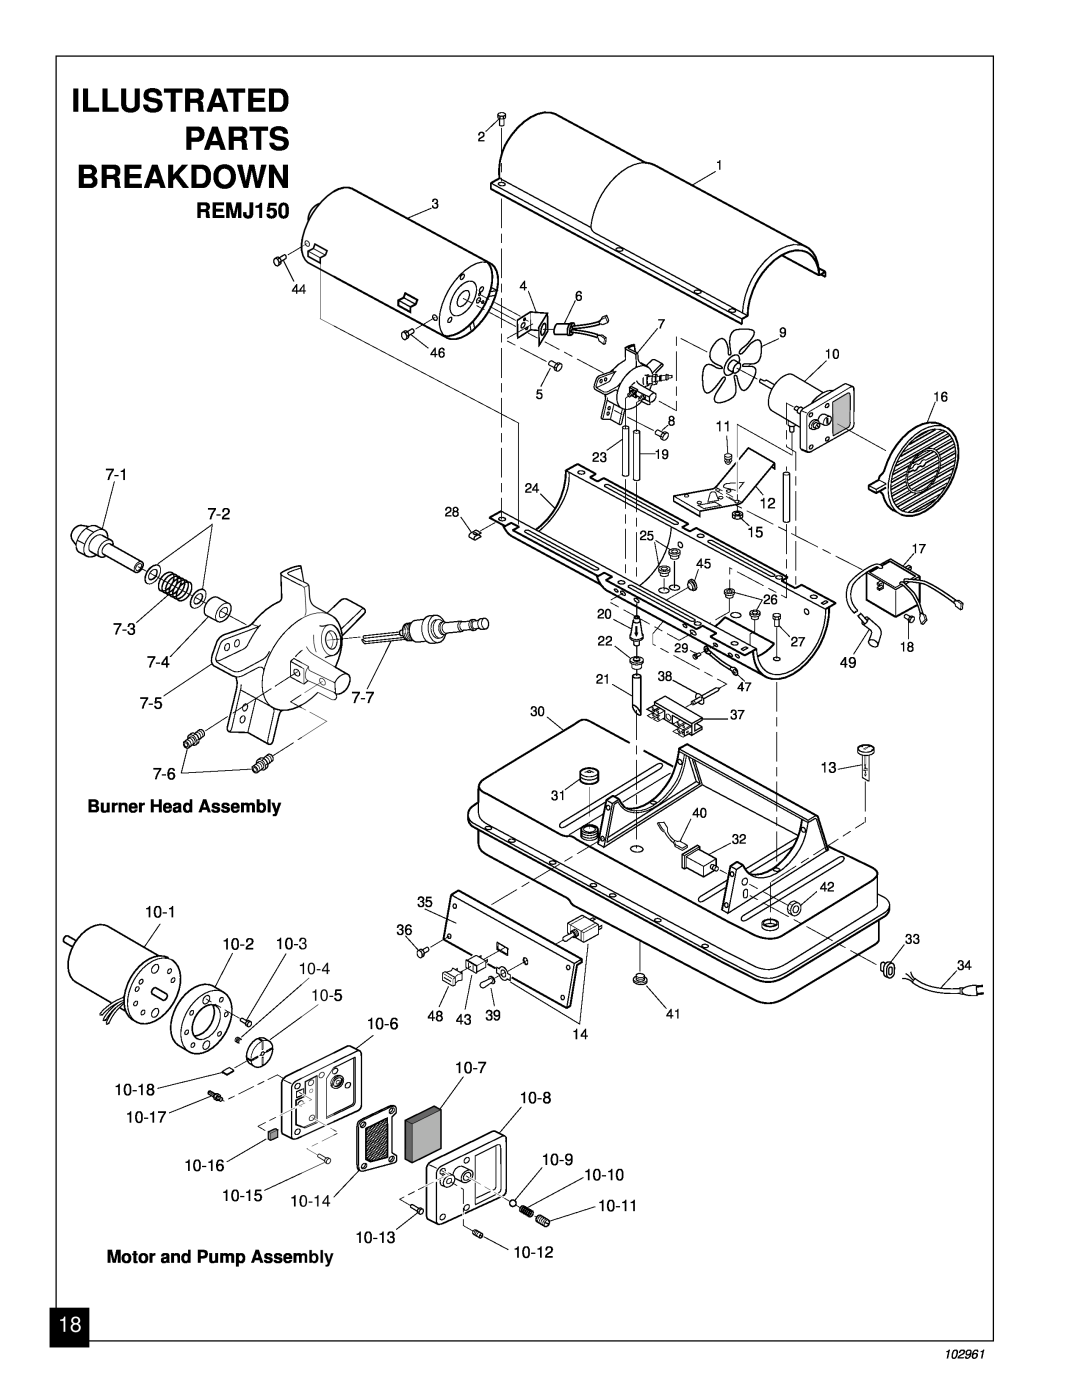 Remington REMJ150, REMJ70 owner manual Illustrated, Parts, Breakdown, Burner Head Assembly, Motor and Pump Assembly 